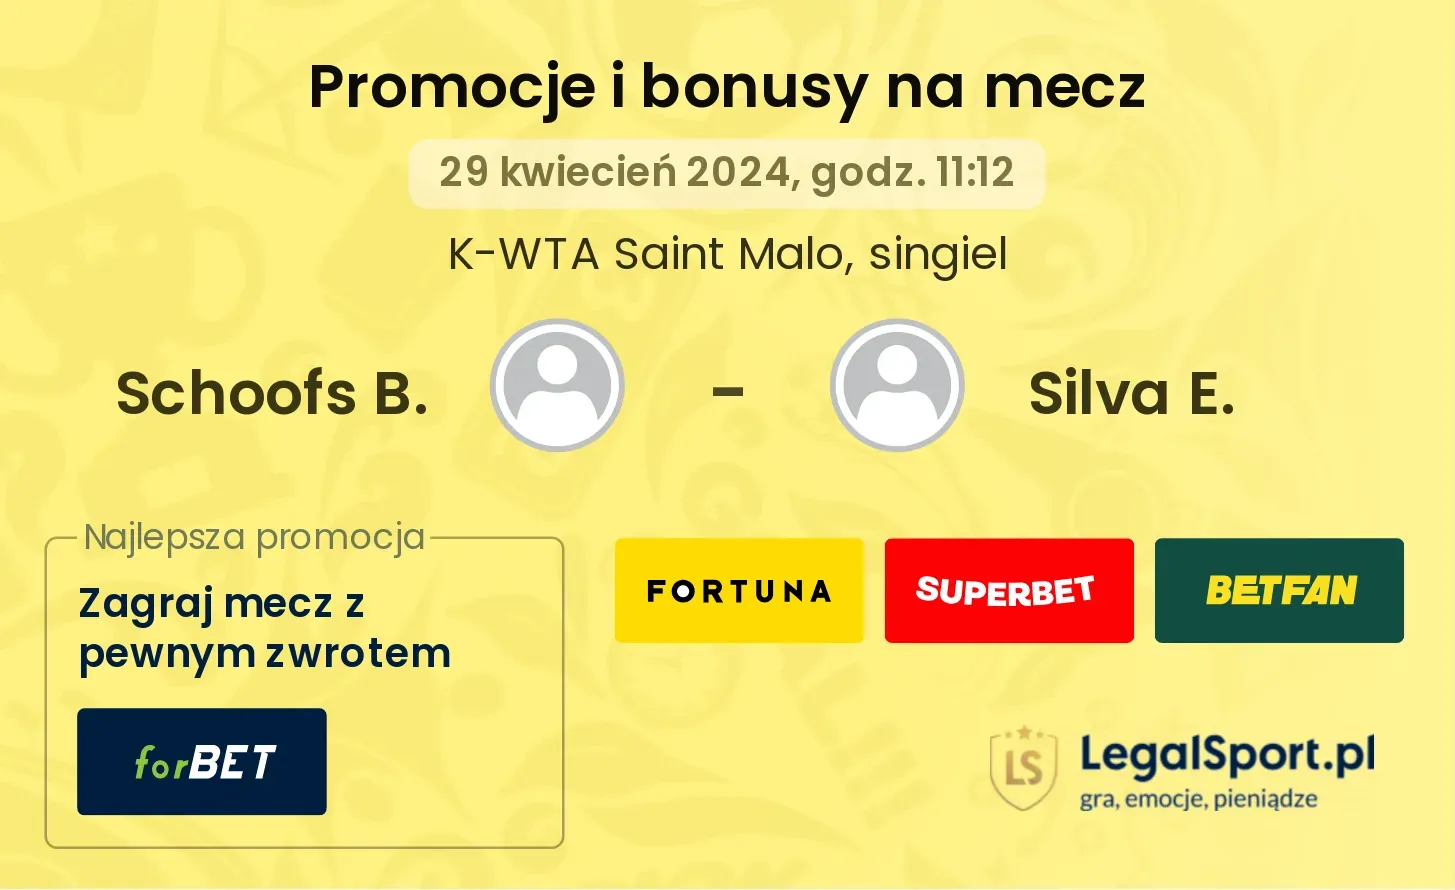 Schoofs B. - Silva E. promocje bonusy na mecz